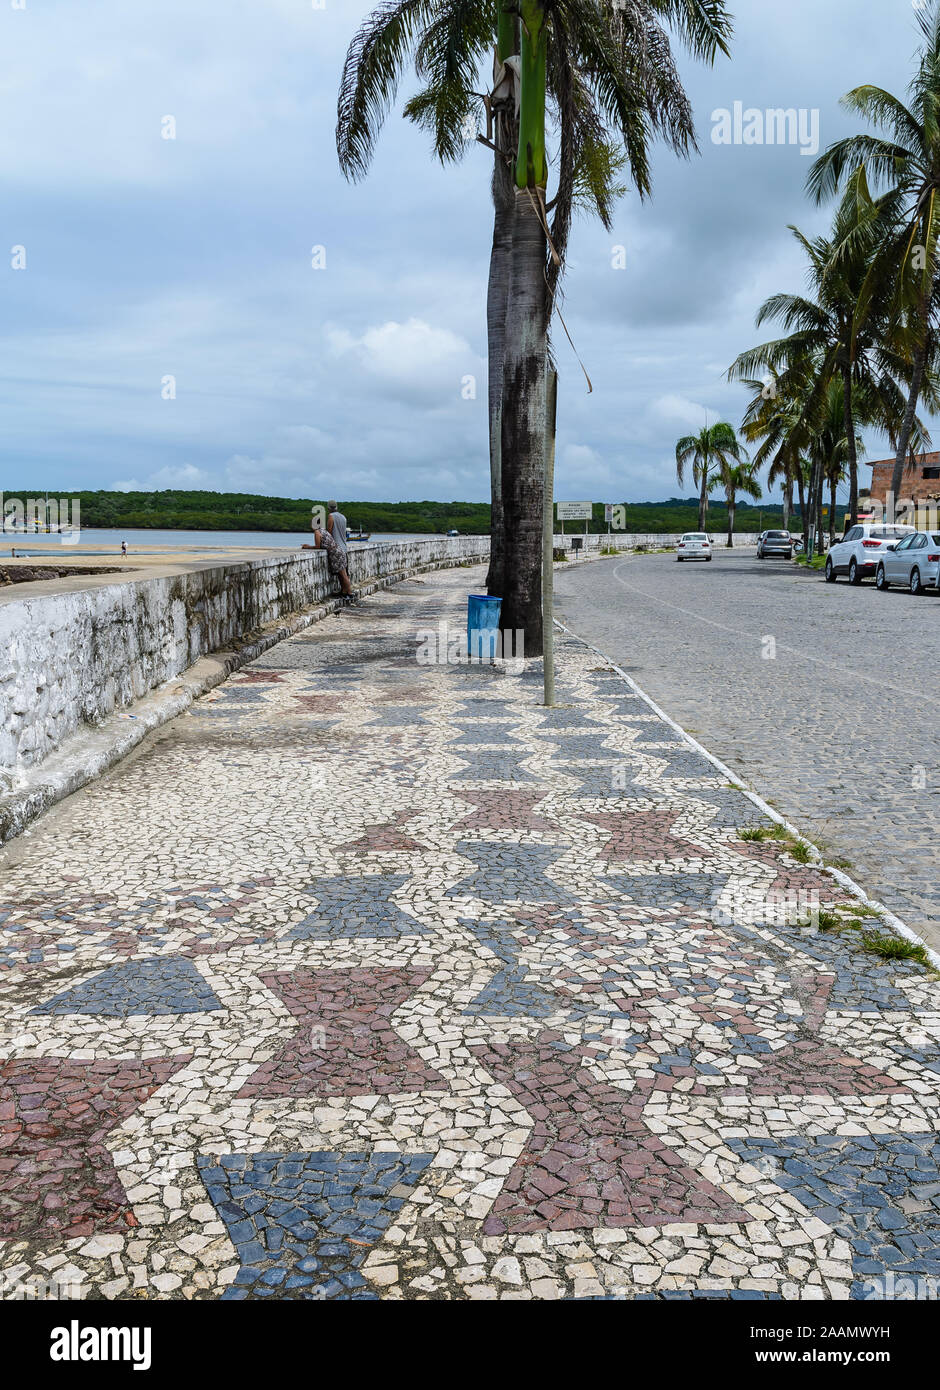 Beautiful mosaic side walk under palm trees in the port city Porto Seguro, Bahia,  Brazil, South America. Stock Photo